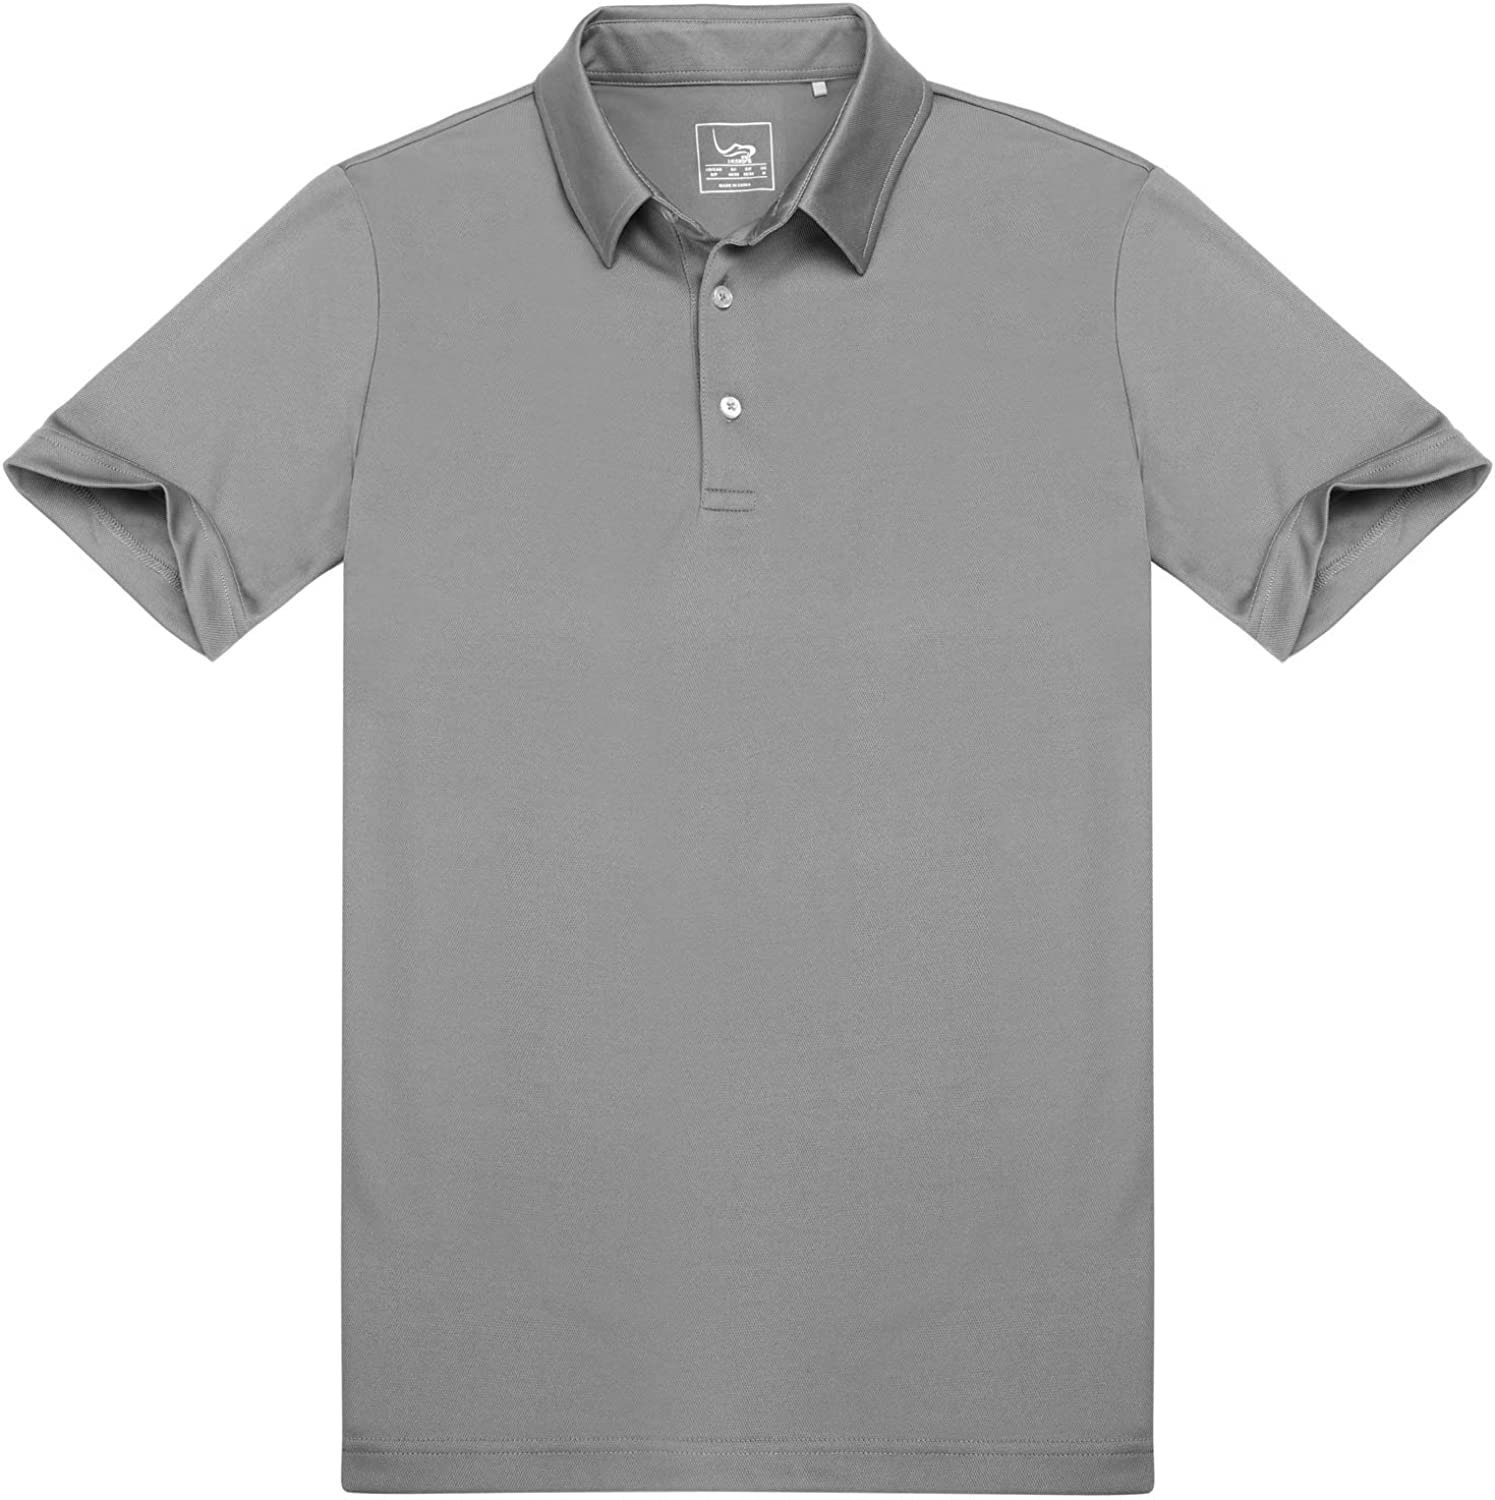 Standard Leicht DEBAIJIA Herren Grau Poloshirt Kurzarm Poloshirt DEBAIJIA Golf Fit Gemütlich